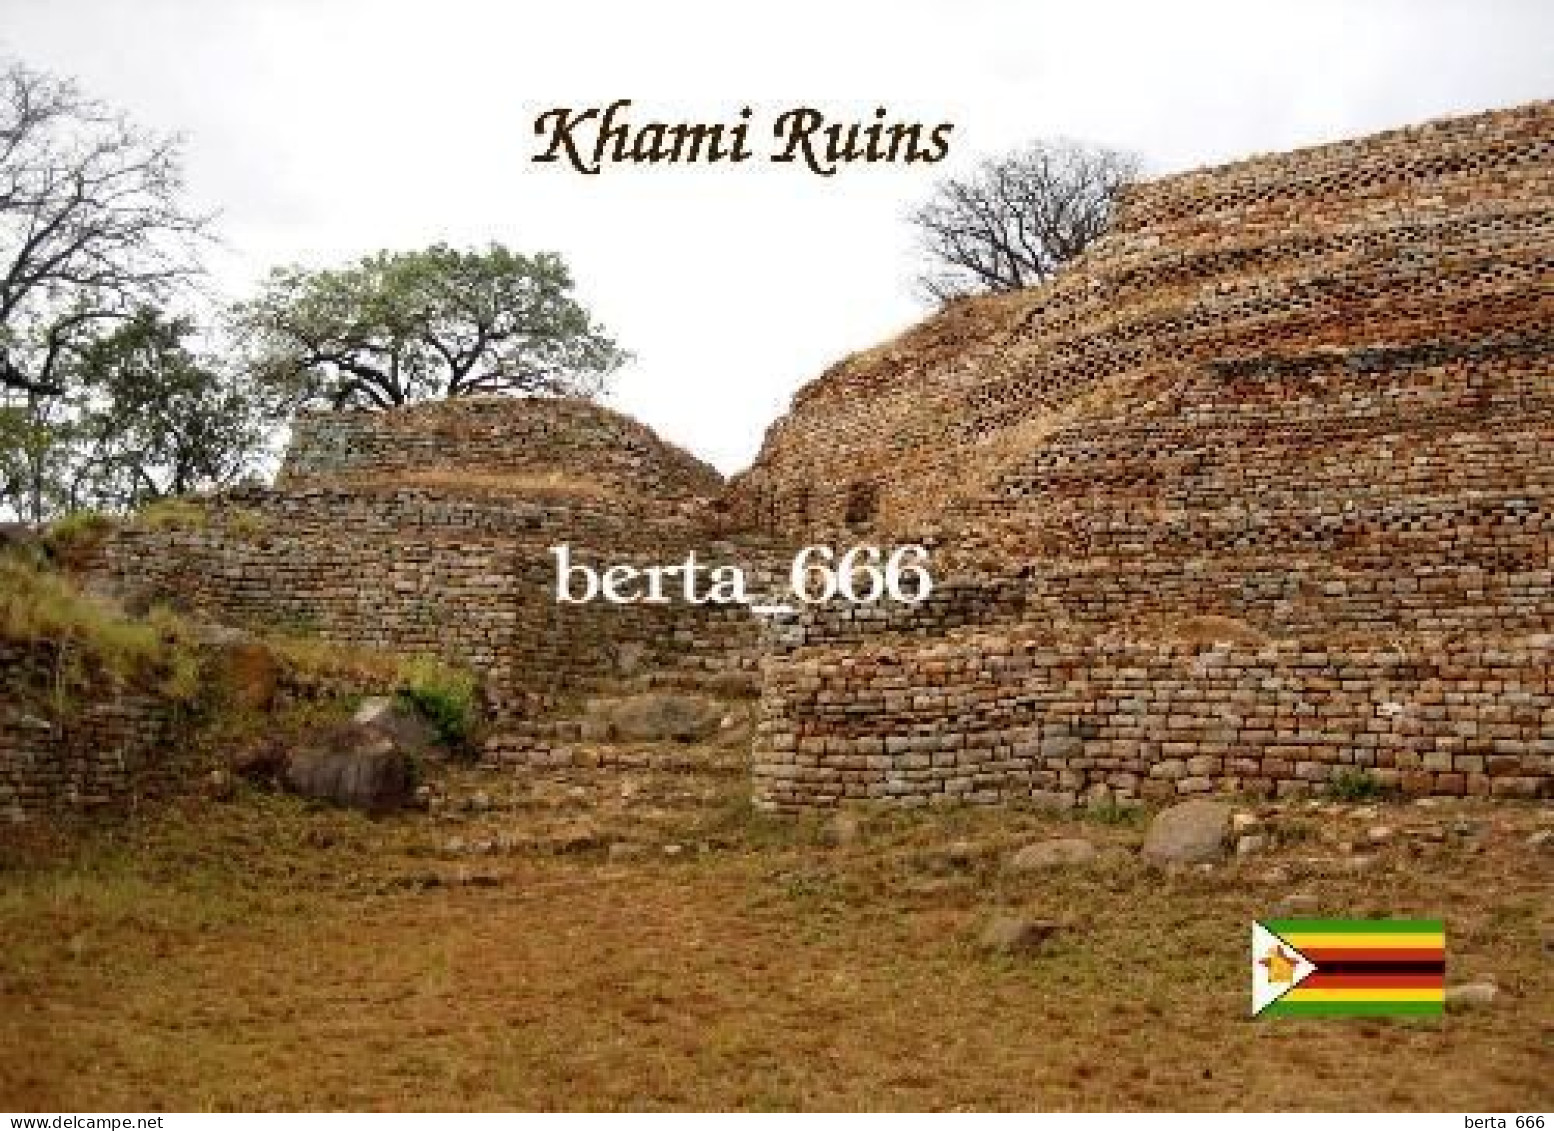 Zimbabwe Khami Ruins UNESCO New Postcard - Simbabwe